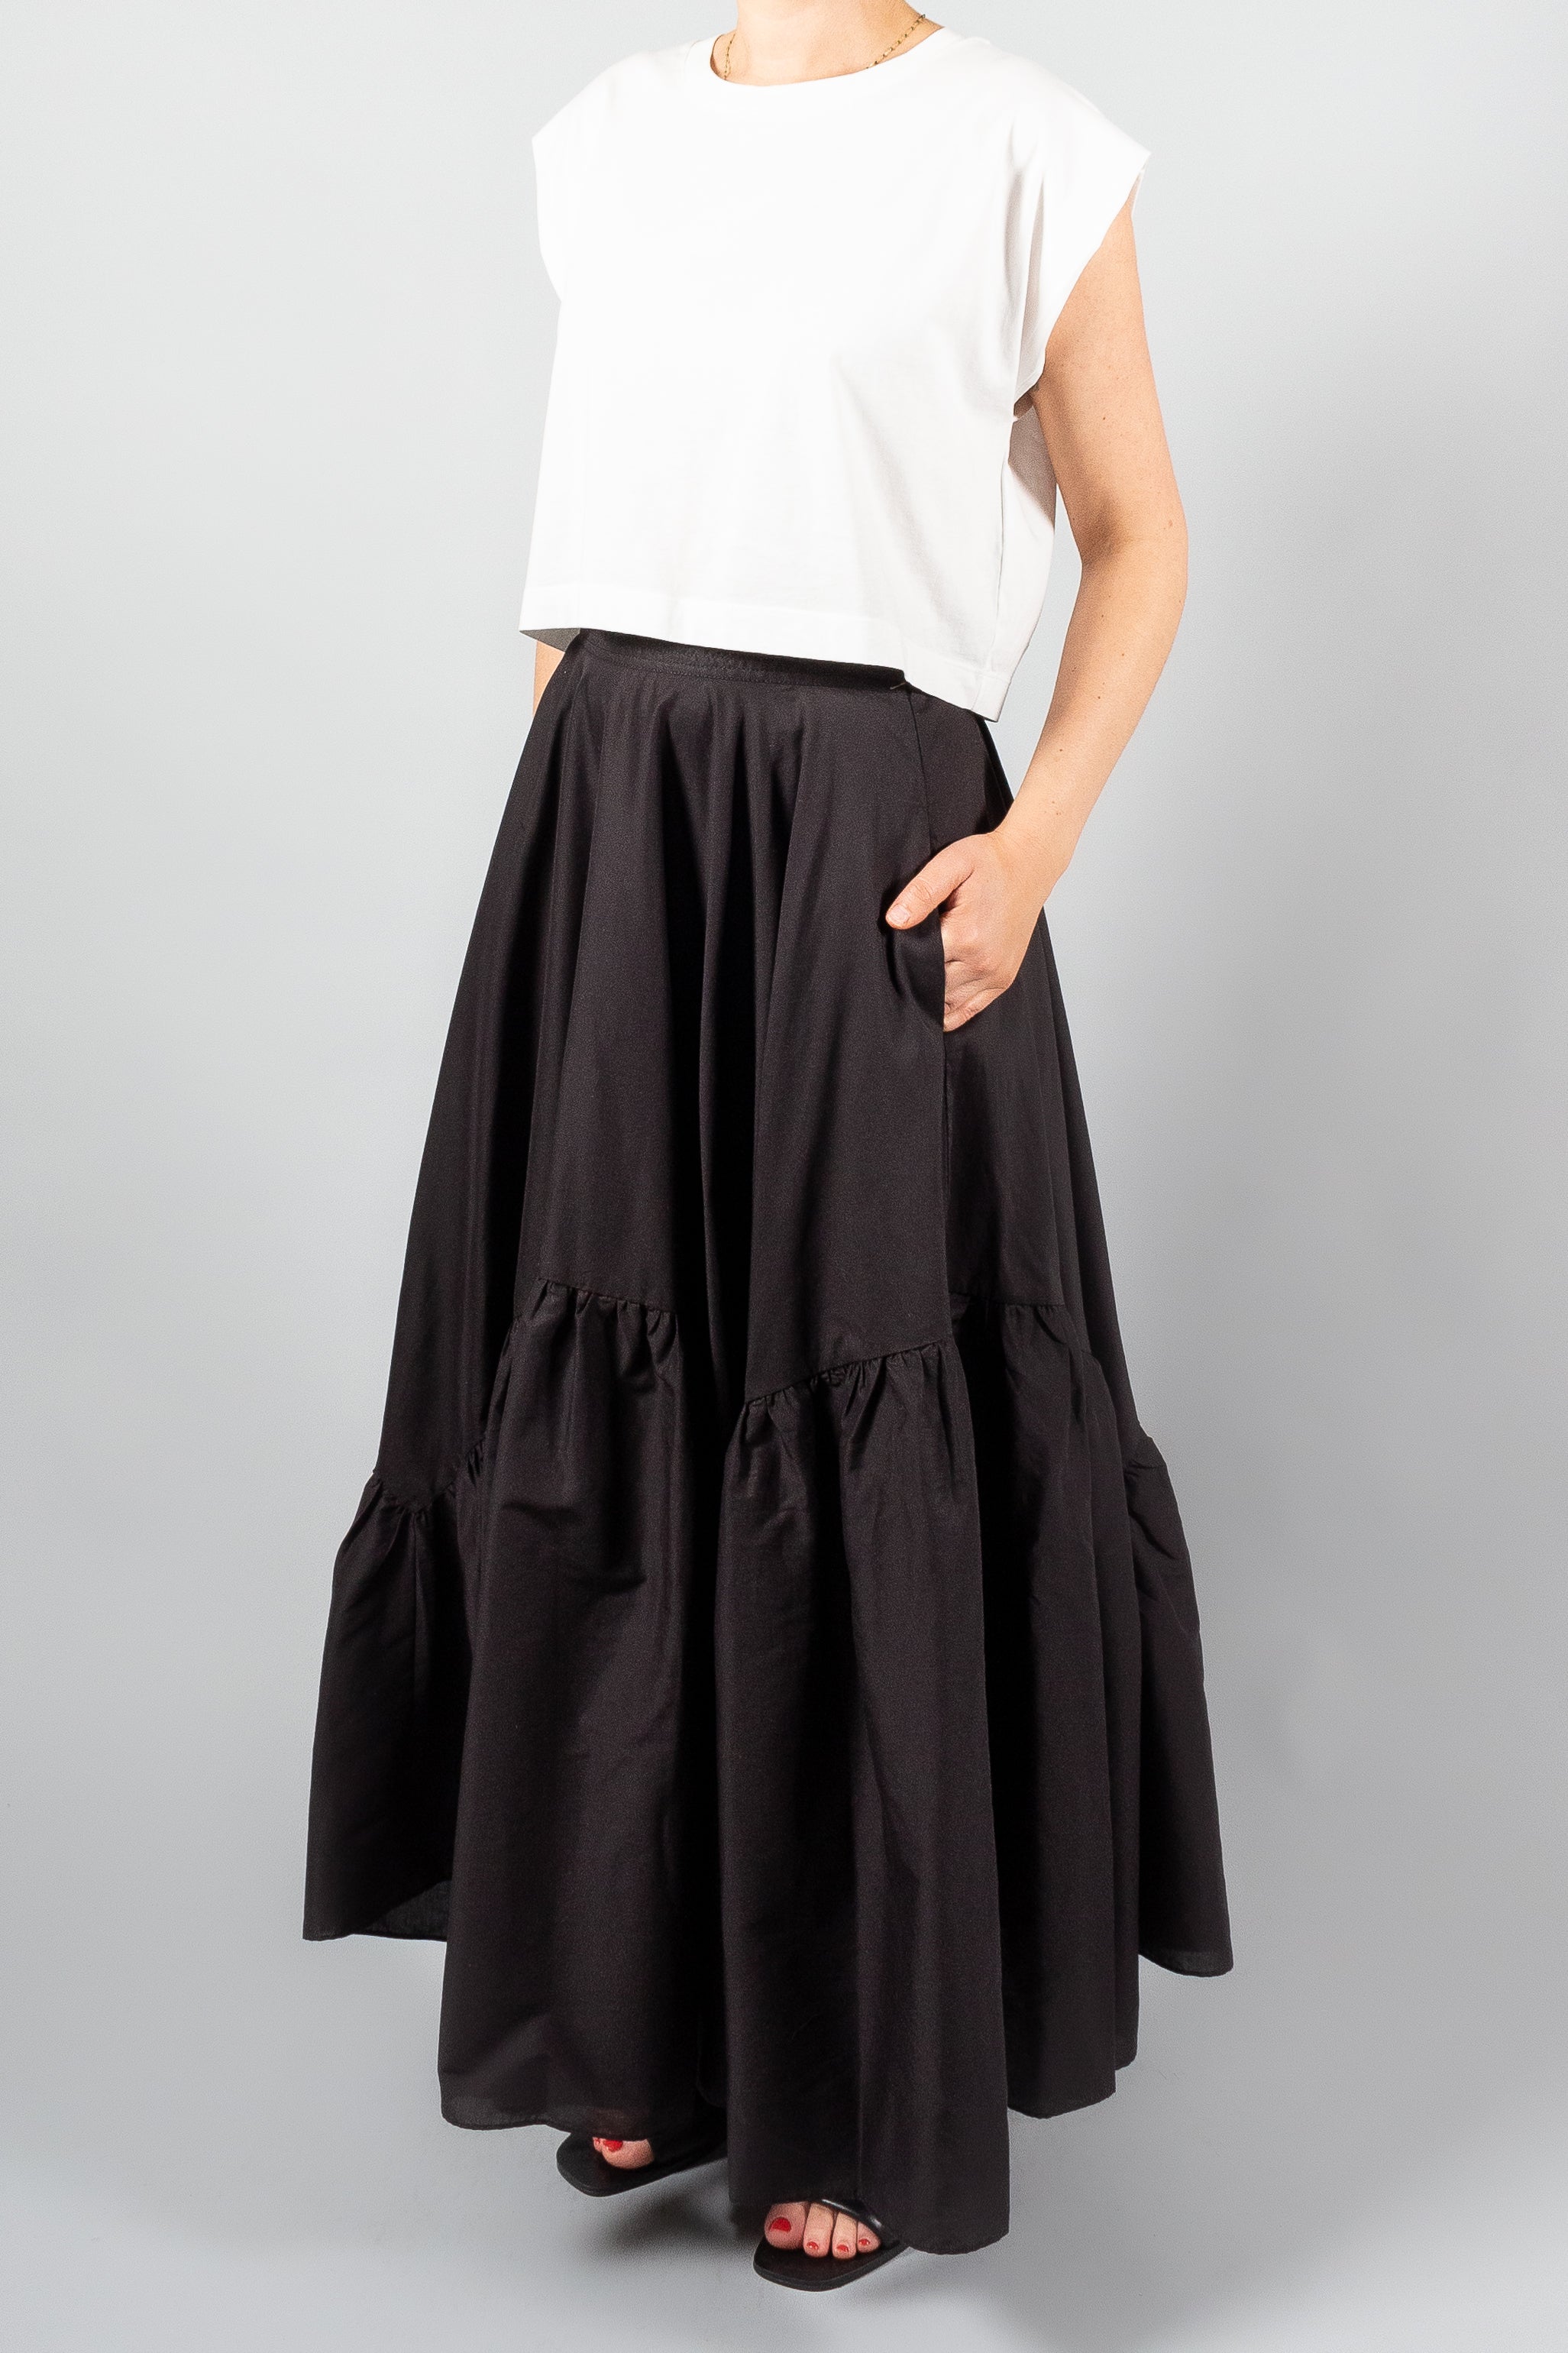 Vanessa Bruno Astree Maxi Skirt